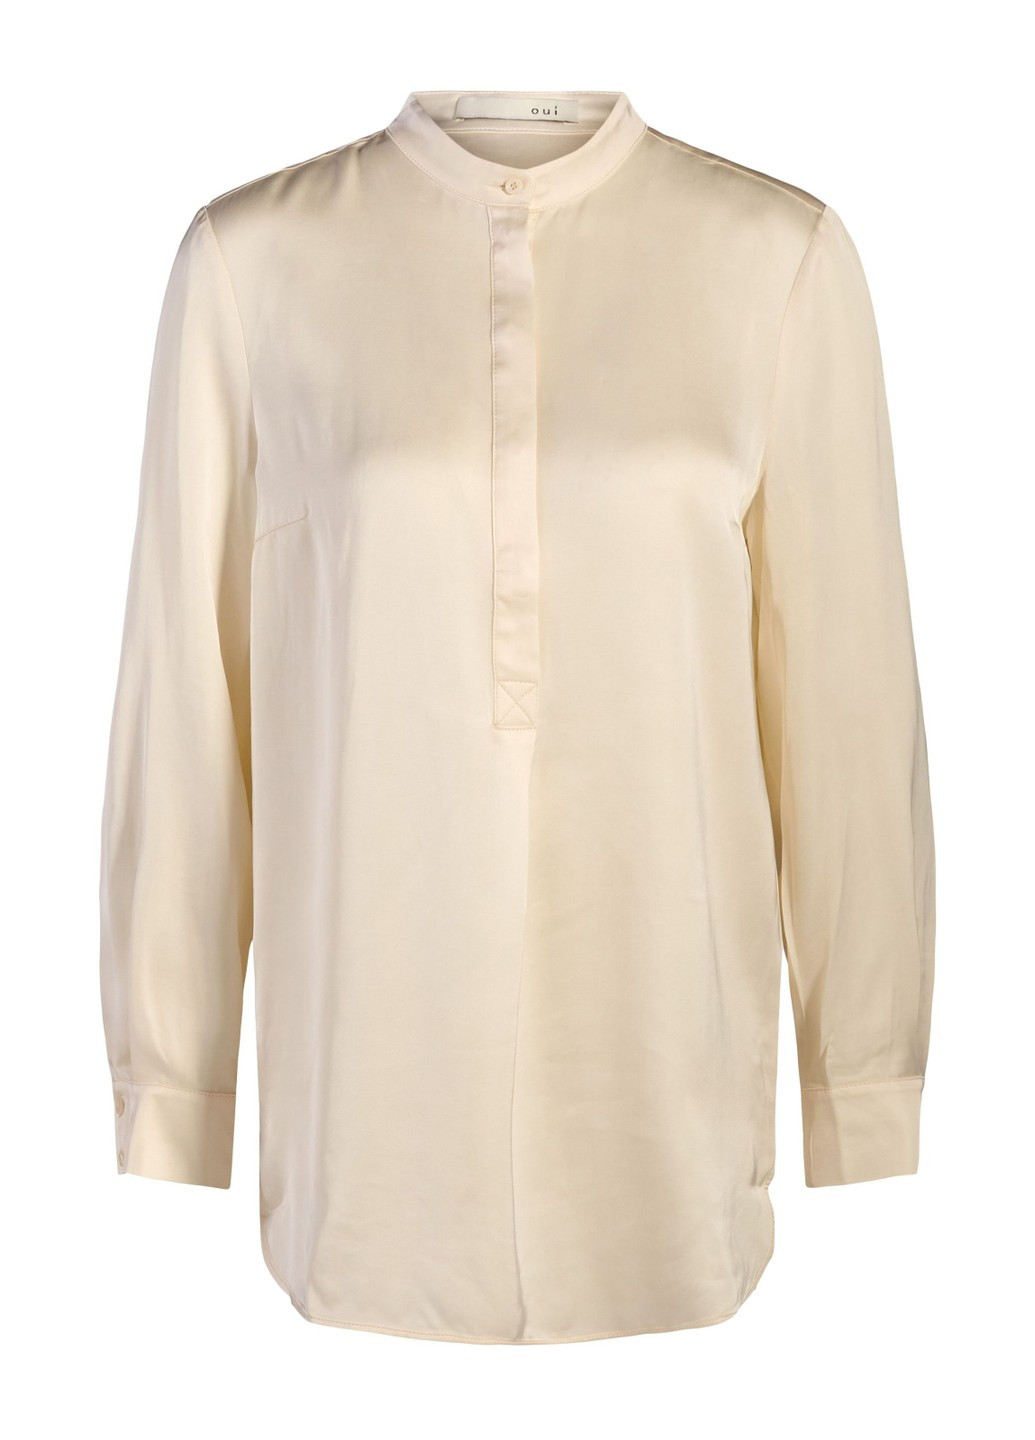 Молочная демисезонная женская блуза молочный на запах Oui